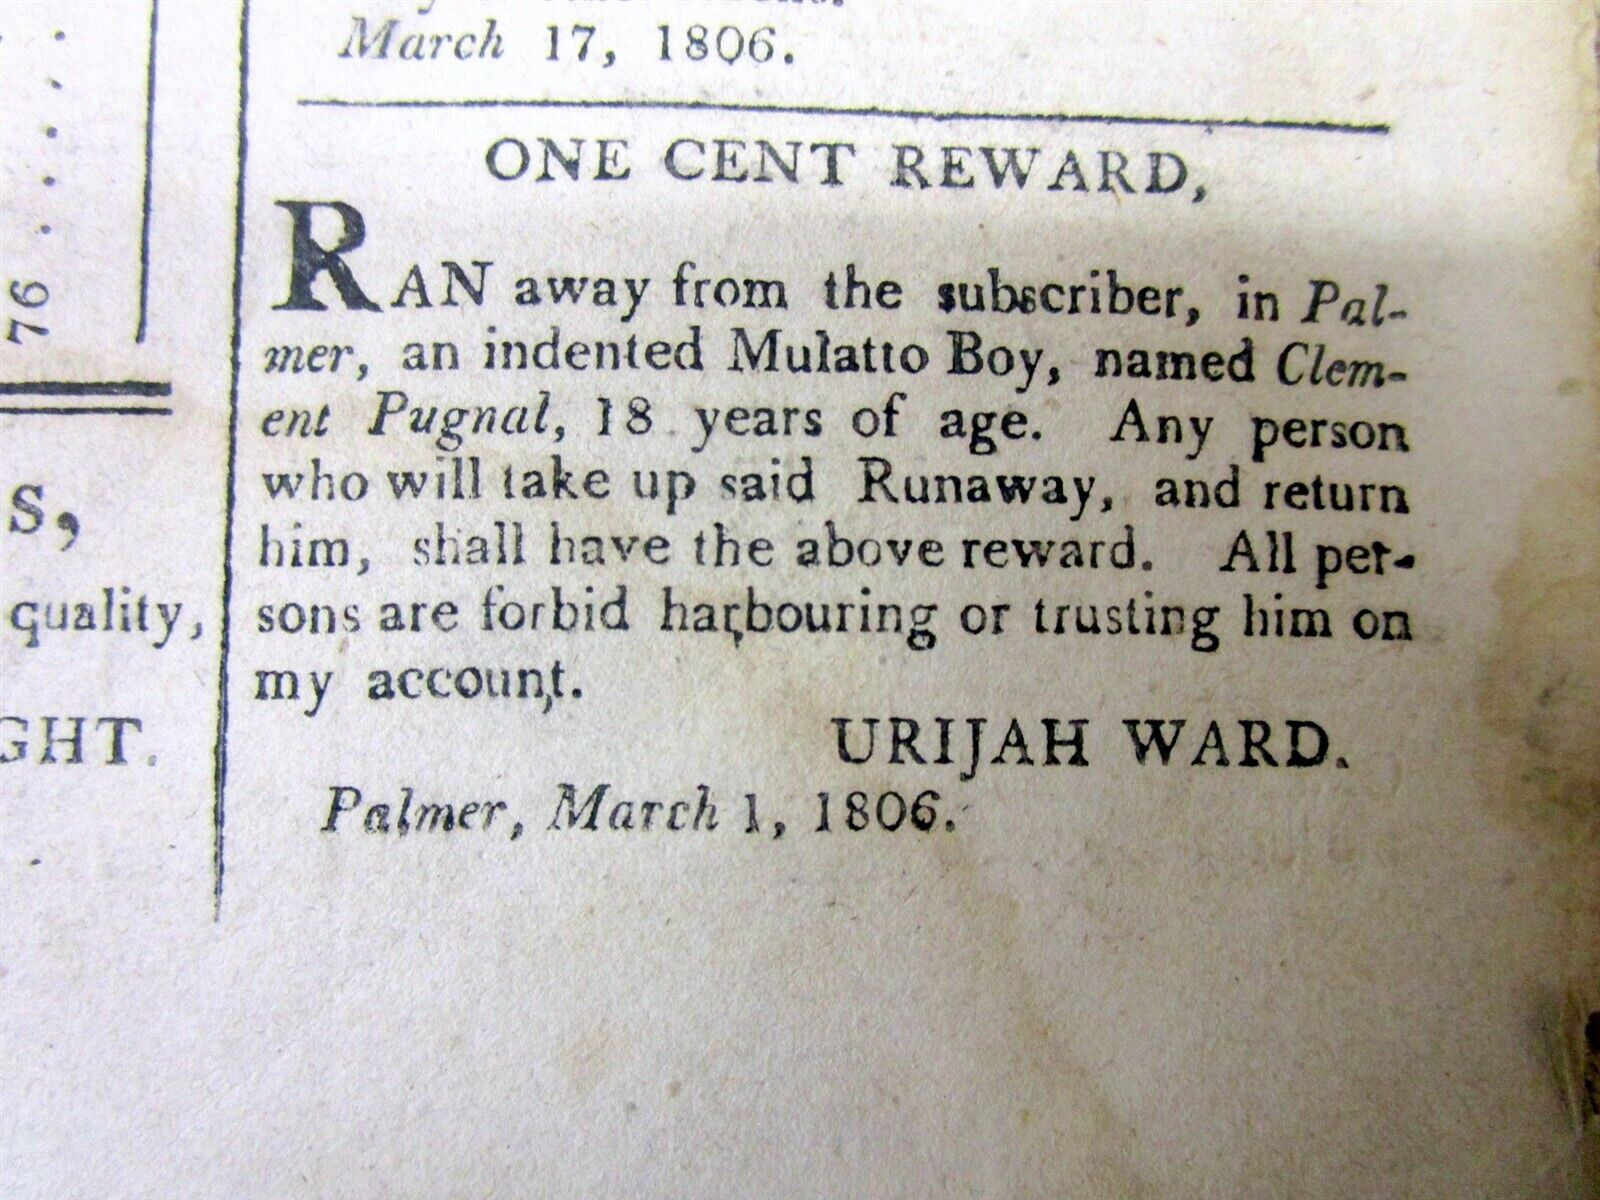 1806 SPRINGFIELD newspaper wth RUNAWAY SLAVE REWARD Ad from PALMER Massachusetts